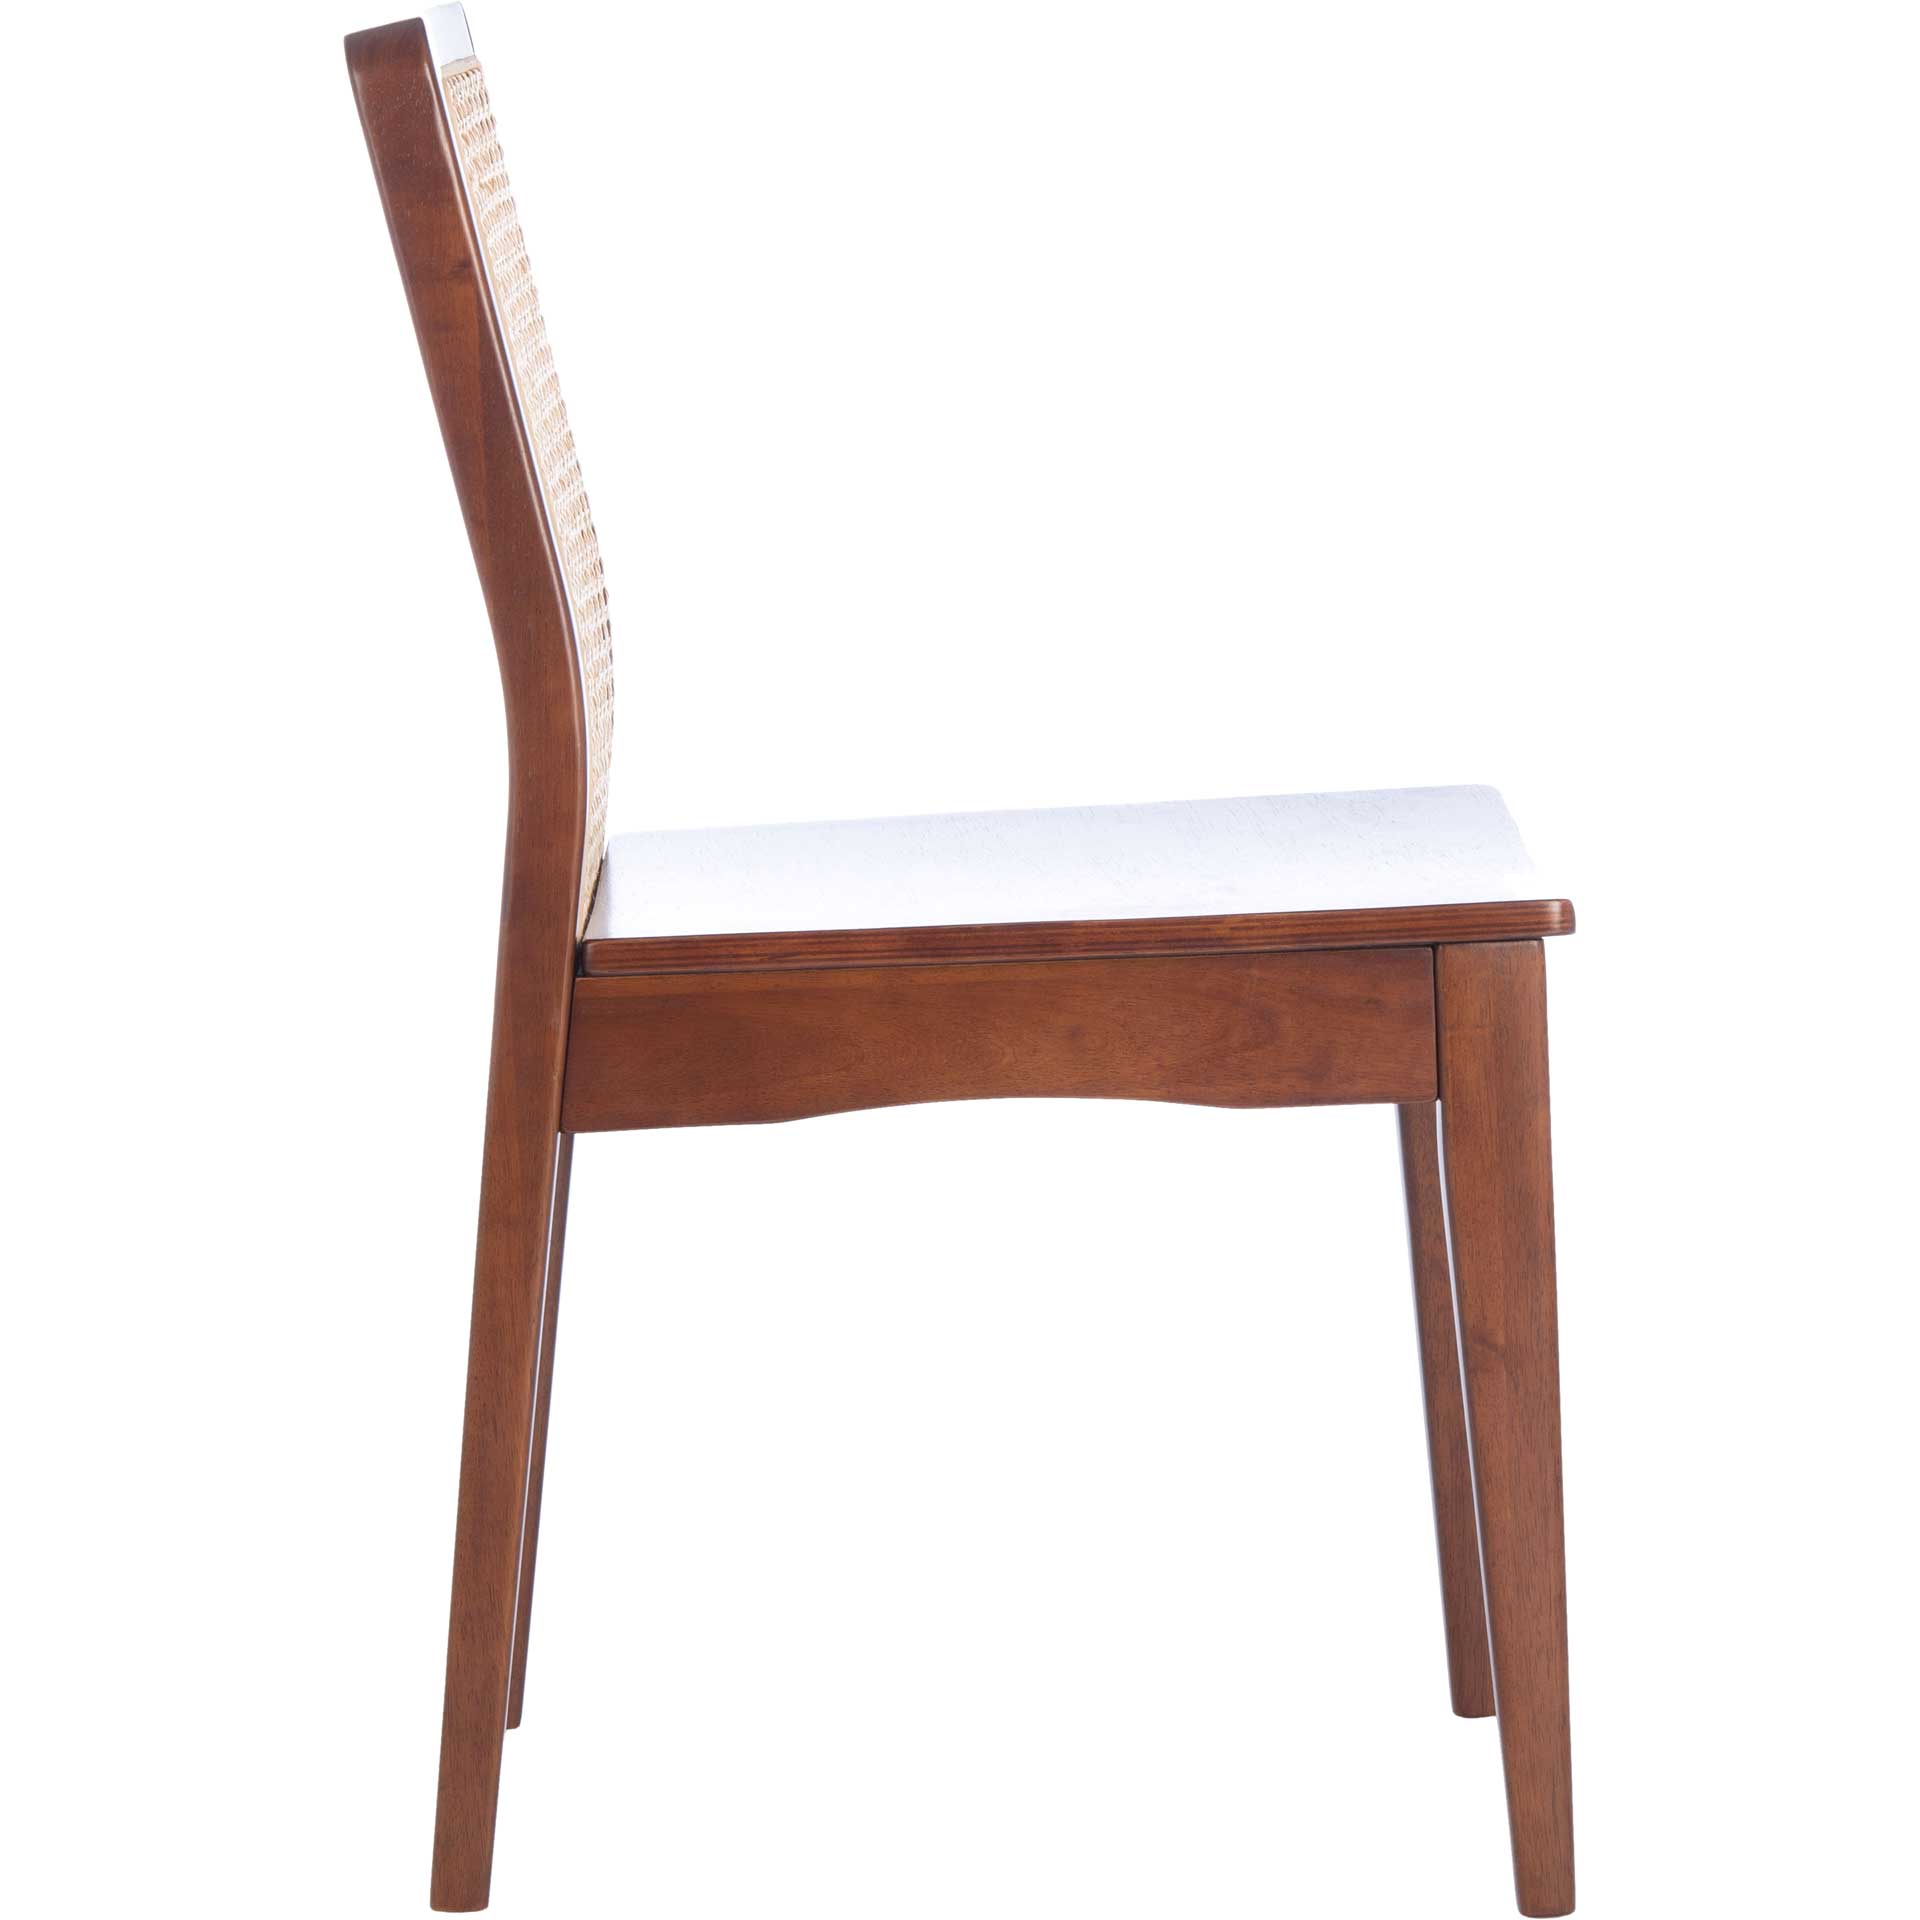 Belomy Rattan Dining Chair Dark Brown/Natural (Set of 2)